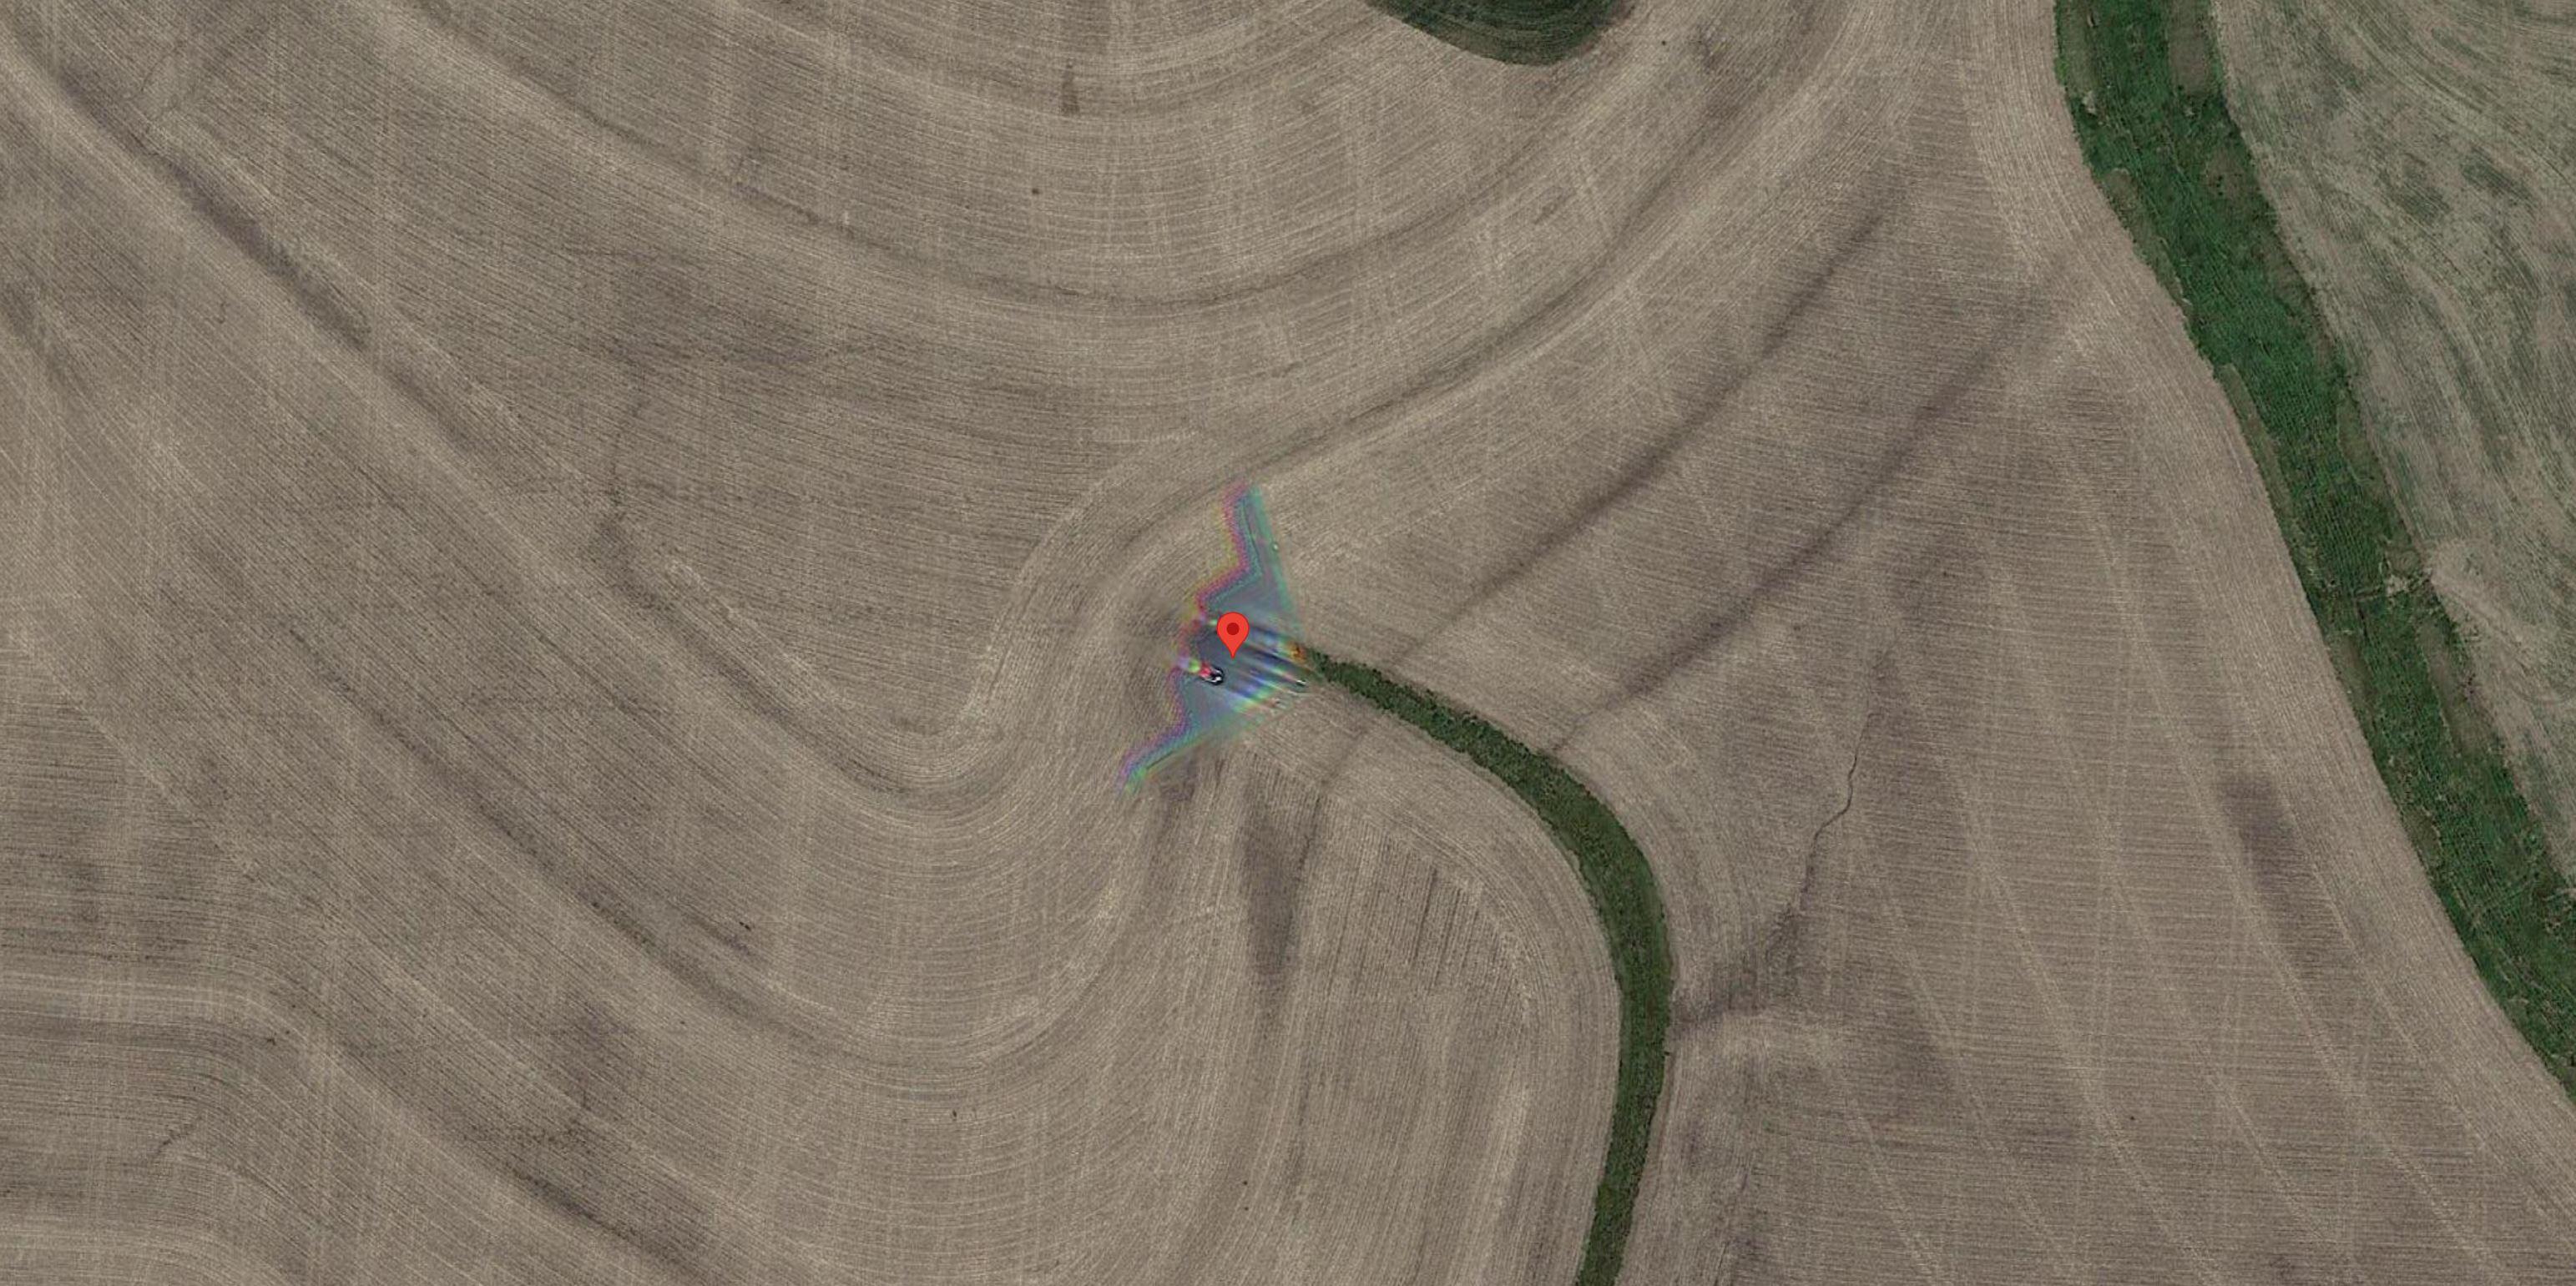 Fant spionfly på Google Maps